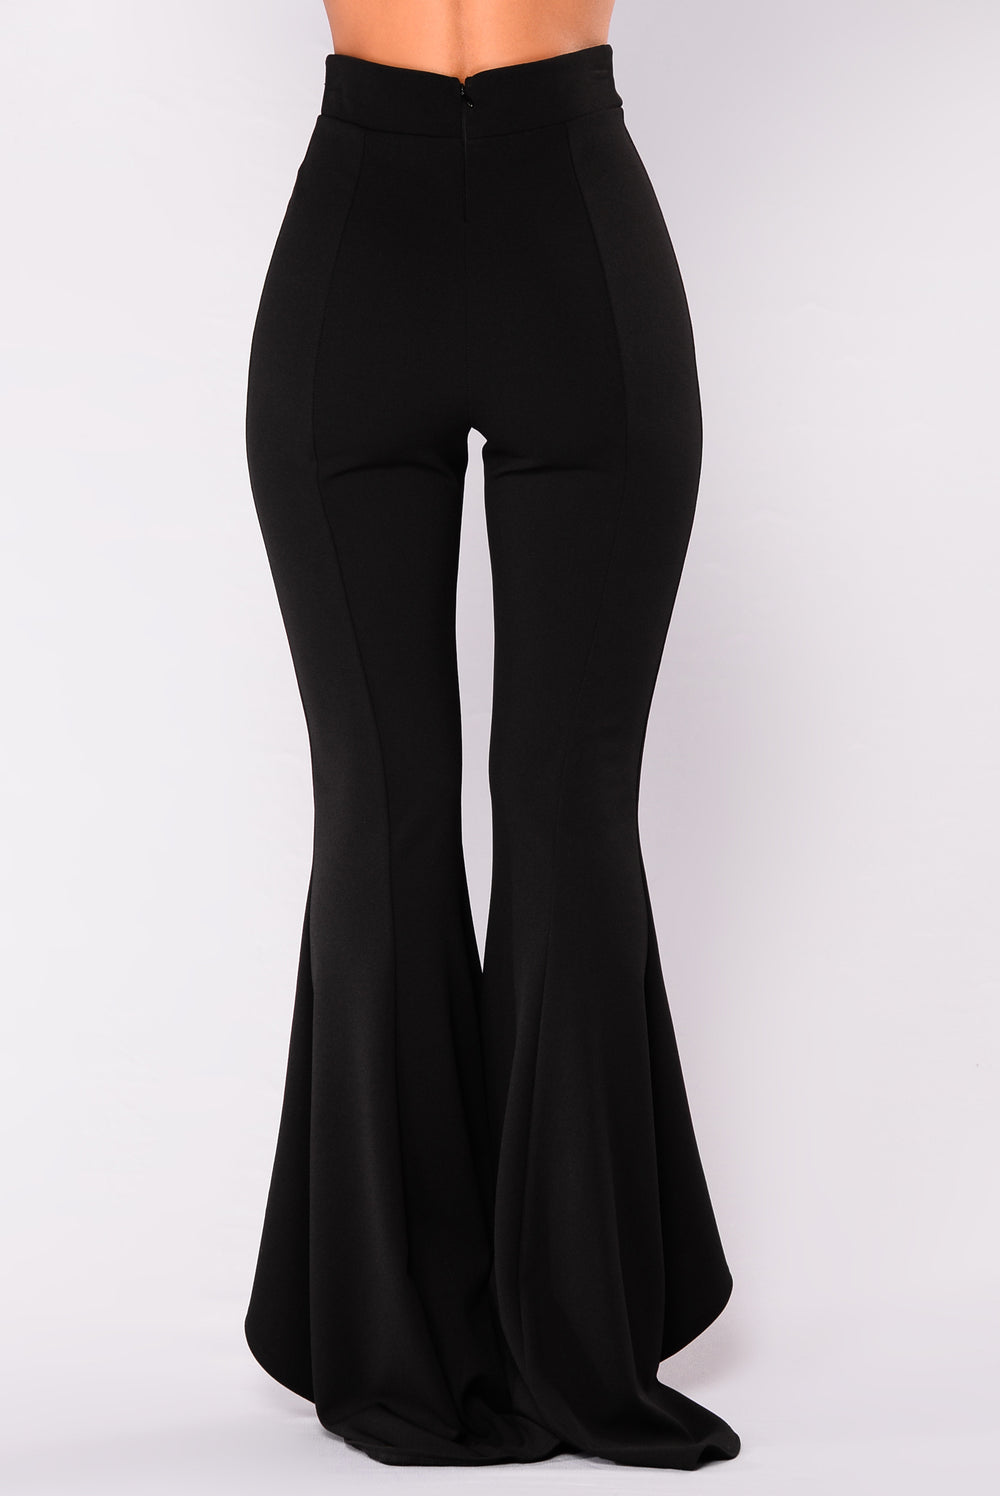 black dress with pants